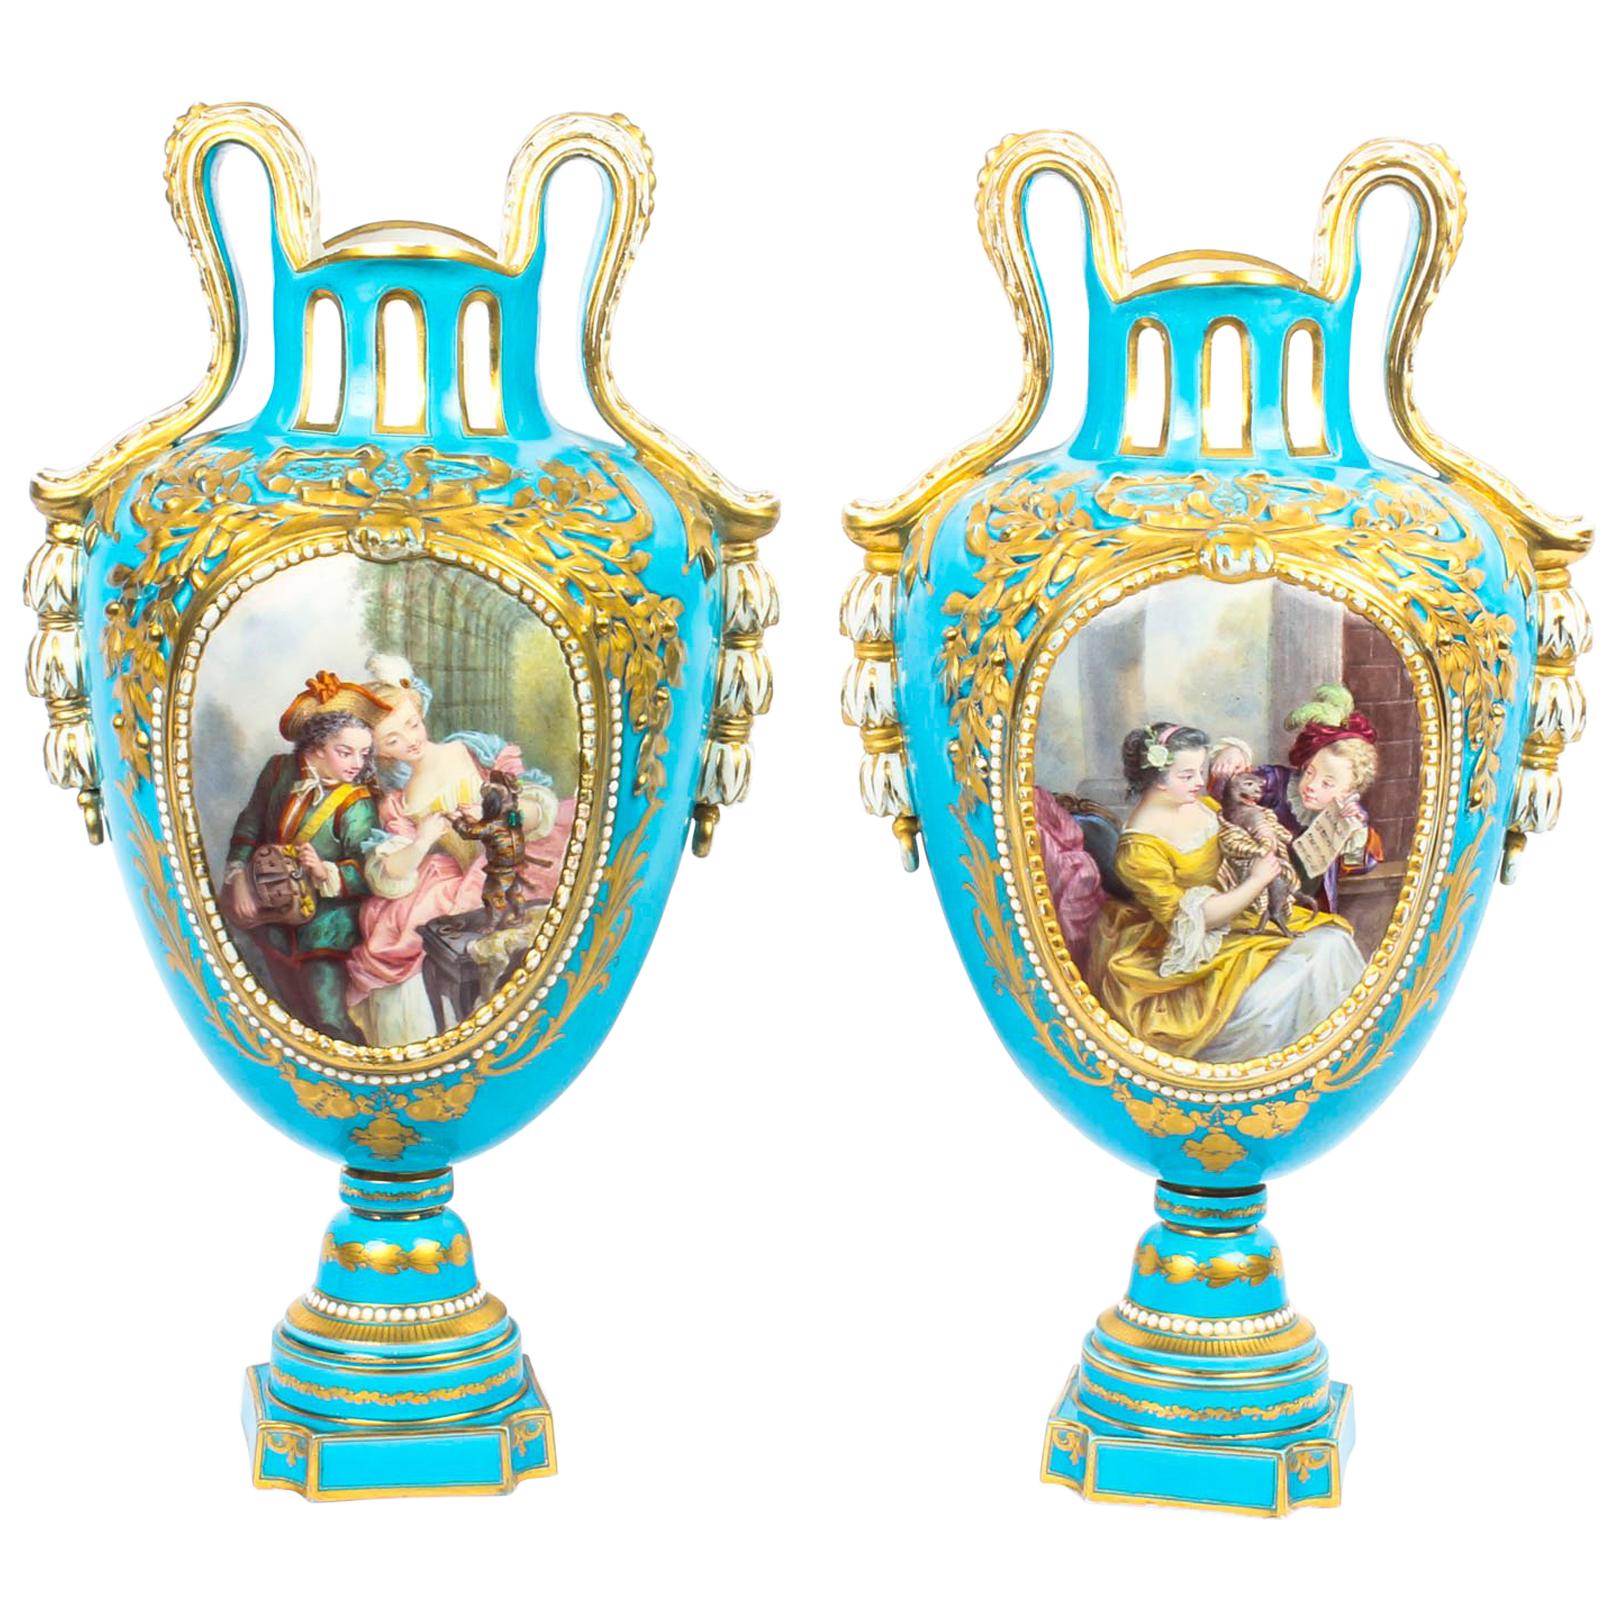 Antique Pair of French Sevres Porcelain Bleu Celeste Vases, 18th Century